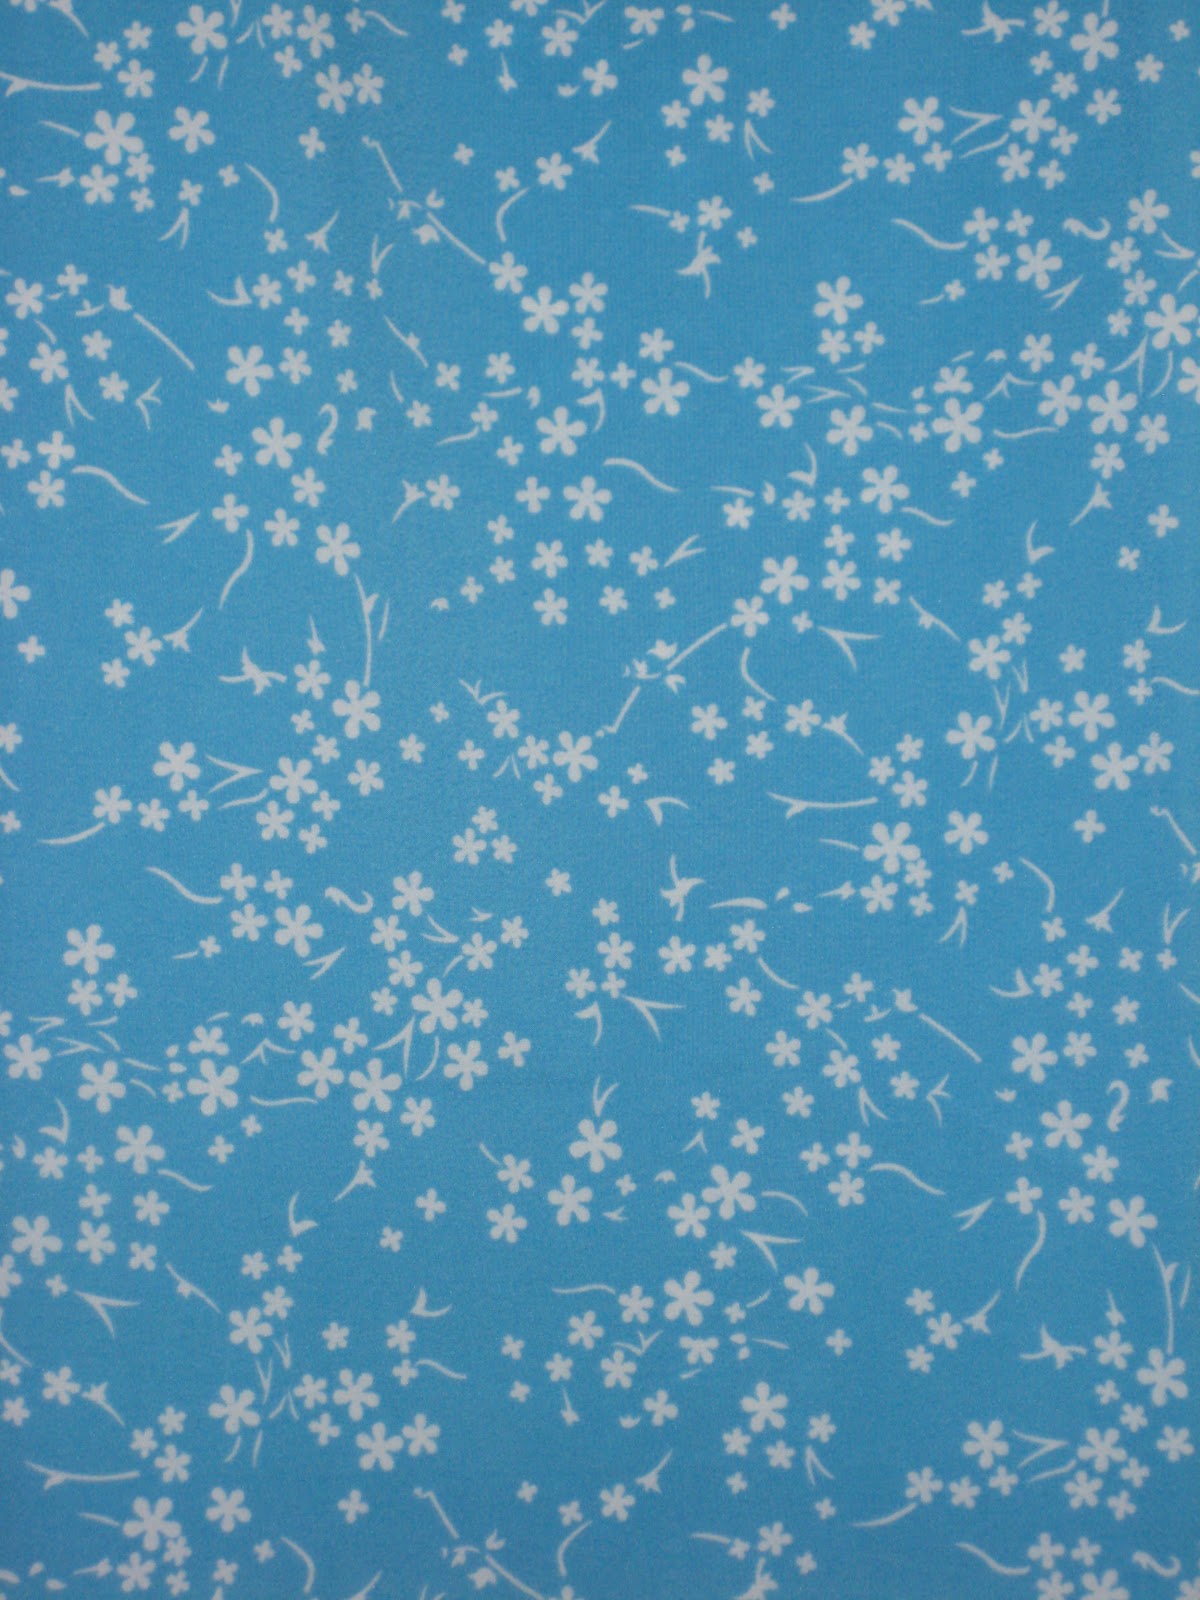 wallpaper biru muda,blue,pattern,aqua,turquoise,azure